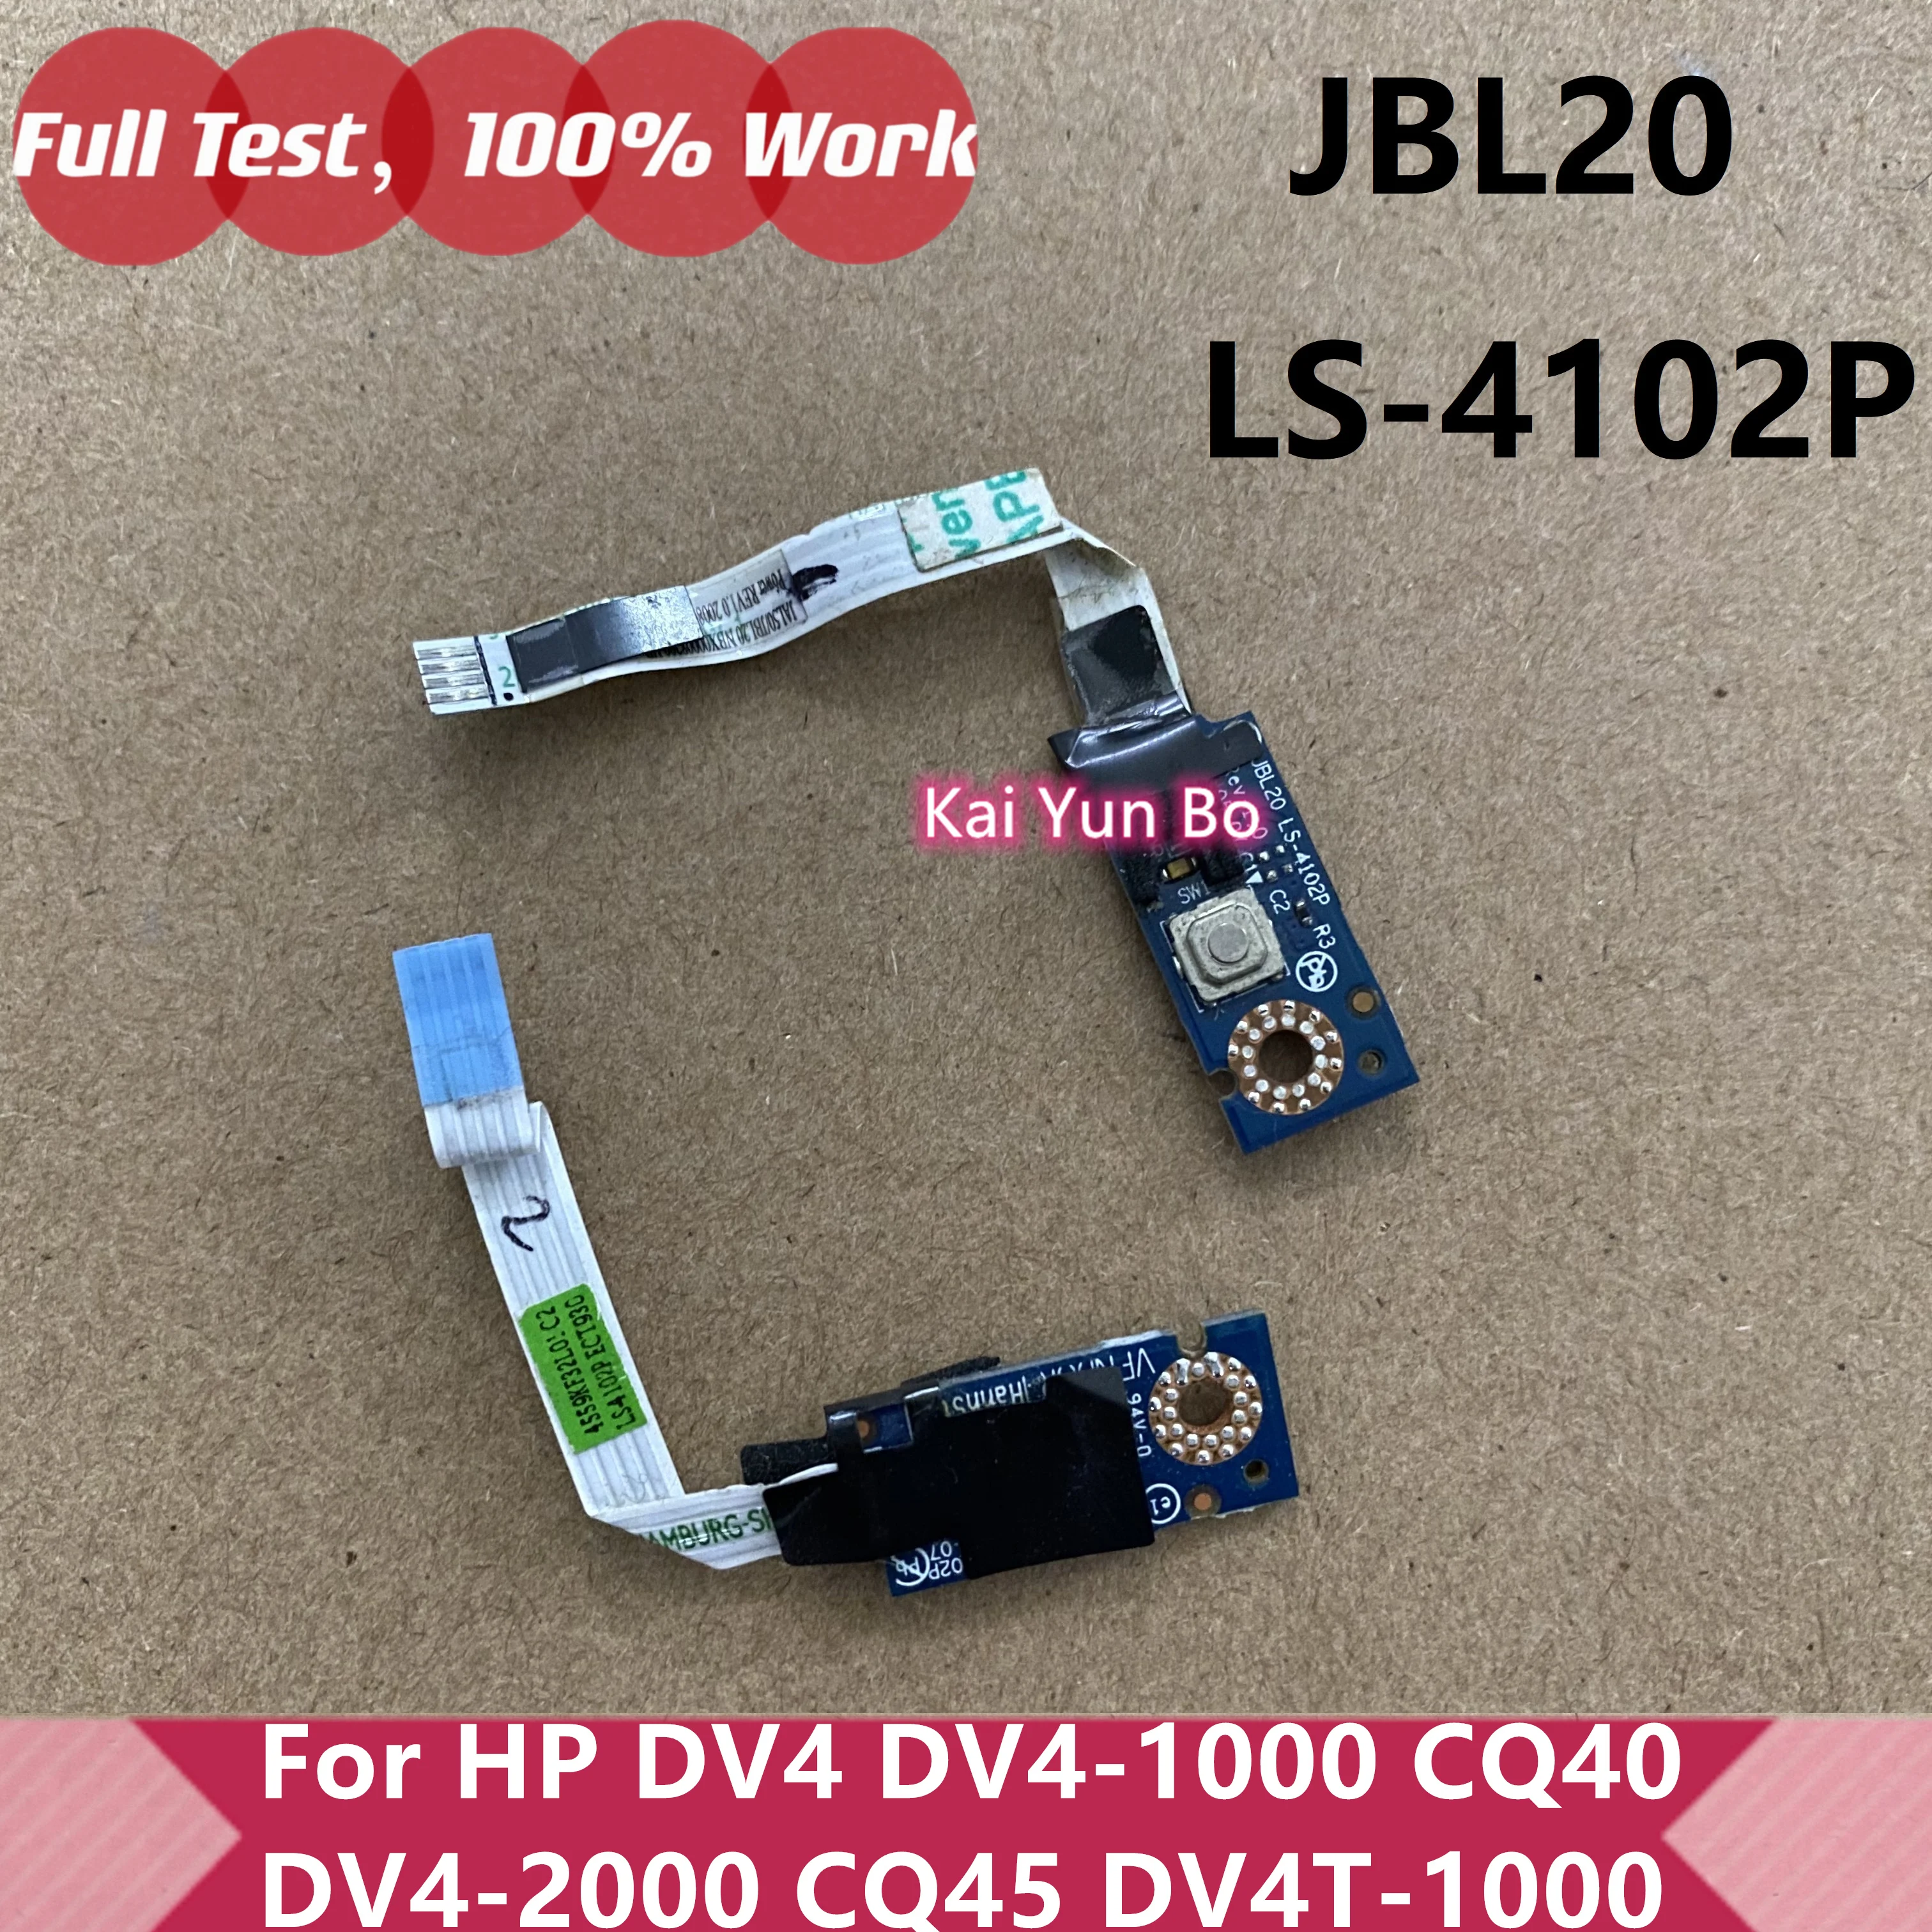 

For HP DV4 DV4-1000 DV4T-1000 DV4-2000 CQ40 CQ45 Laptop Power Switch Board +Cable JBL20 LS-4102P 4559KF32L01 NBX0000B200